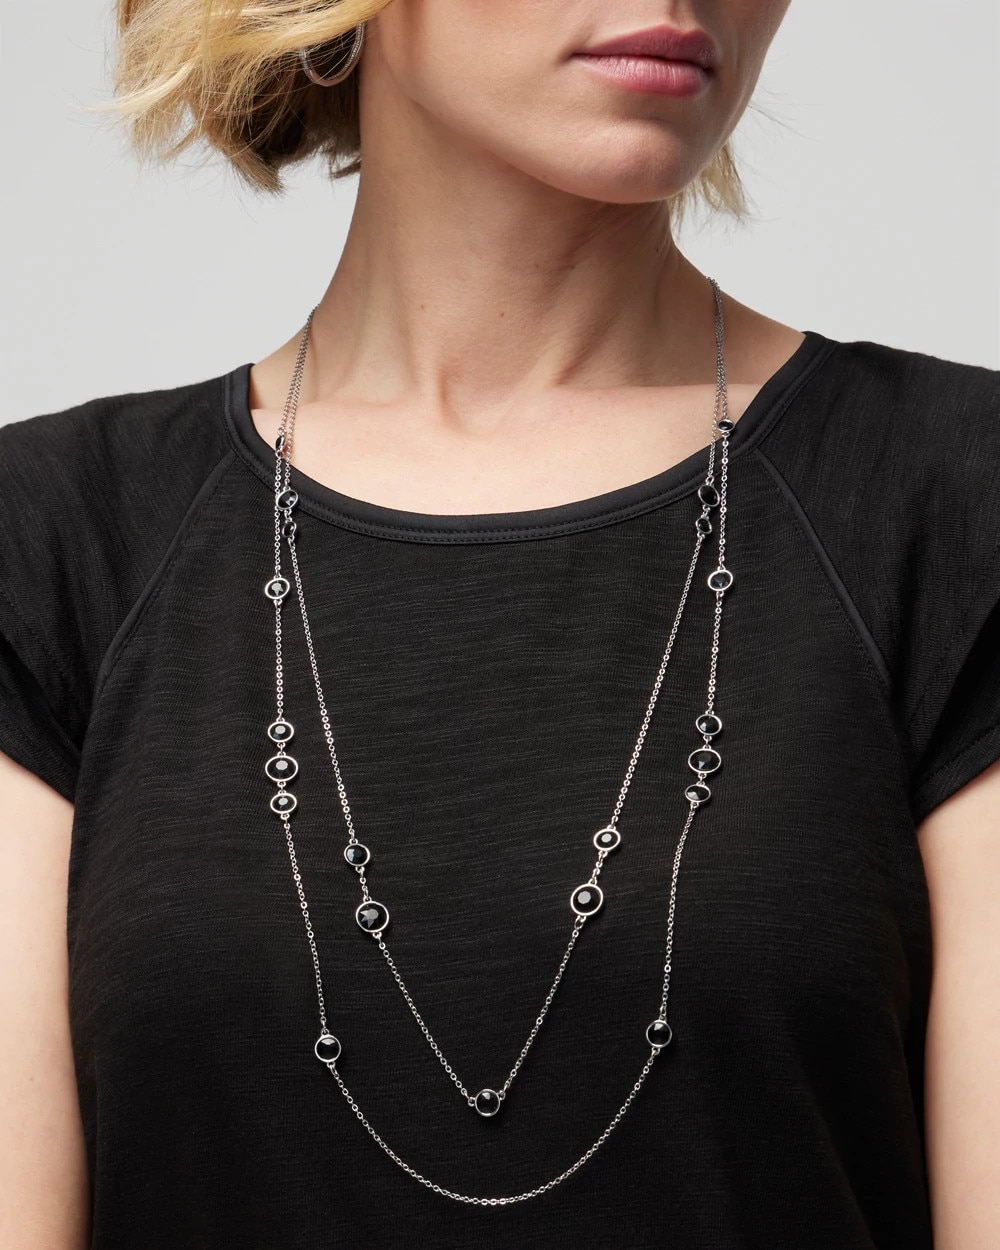 Silver Sparkles Statement necklace set - Michele Maher Designs